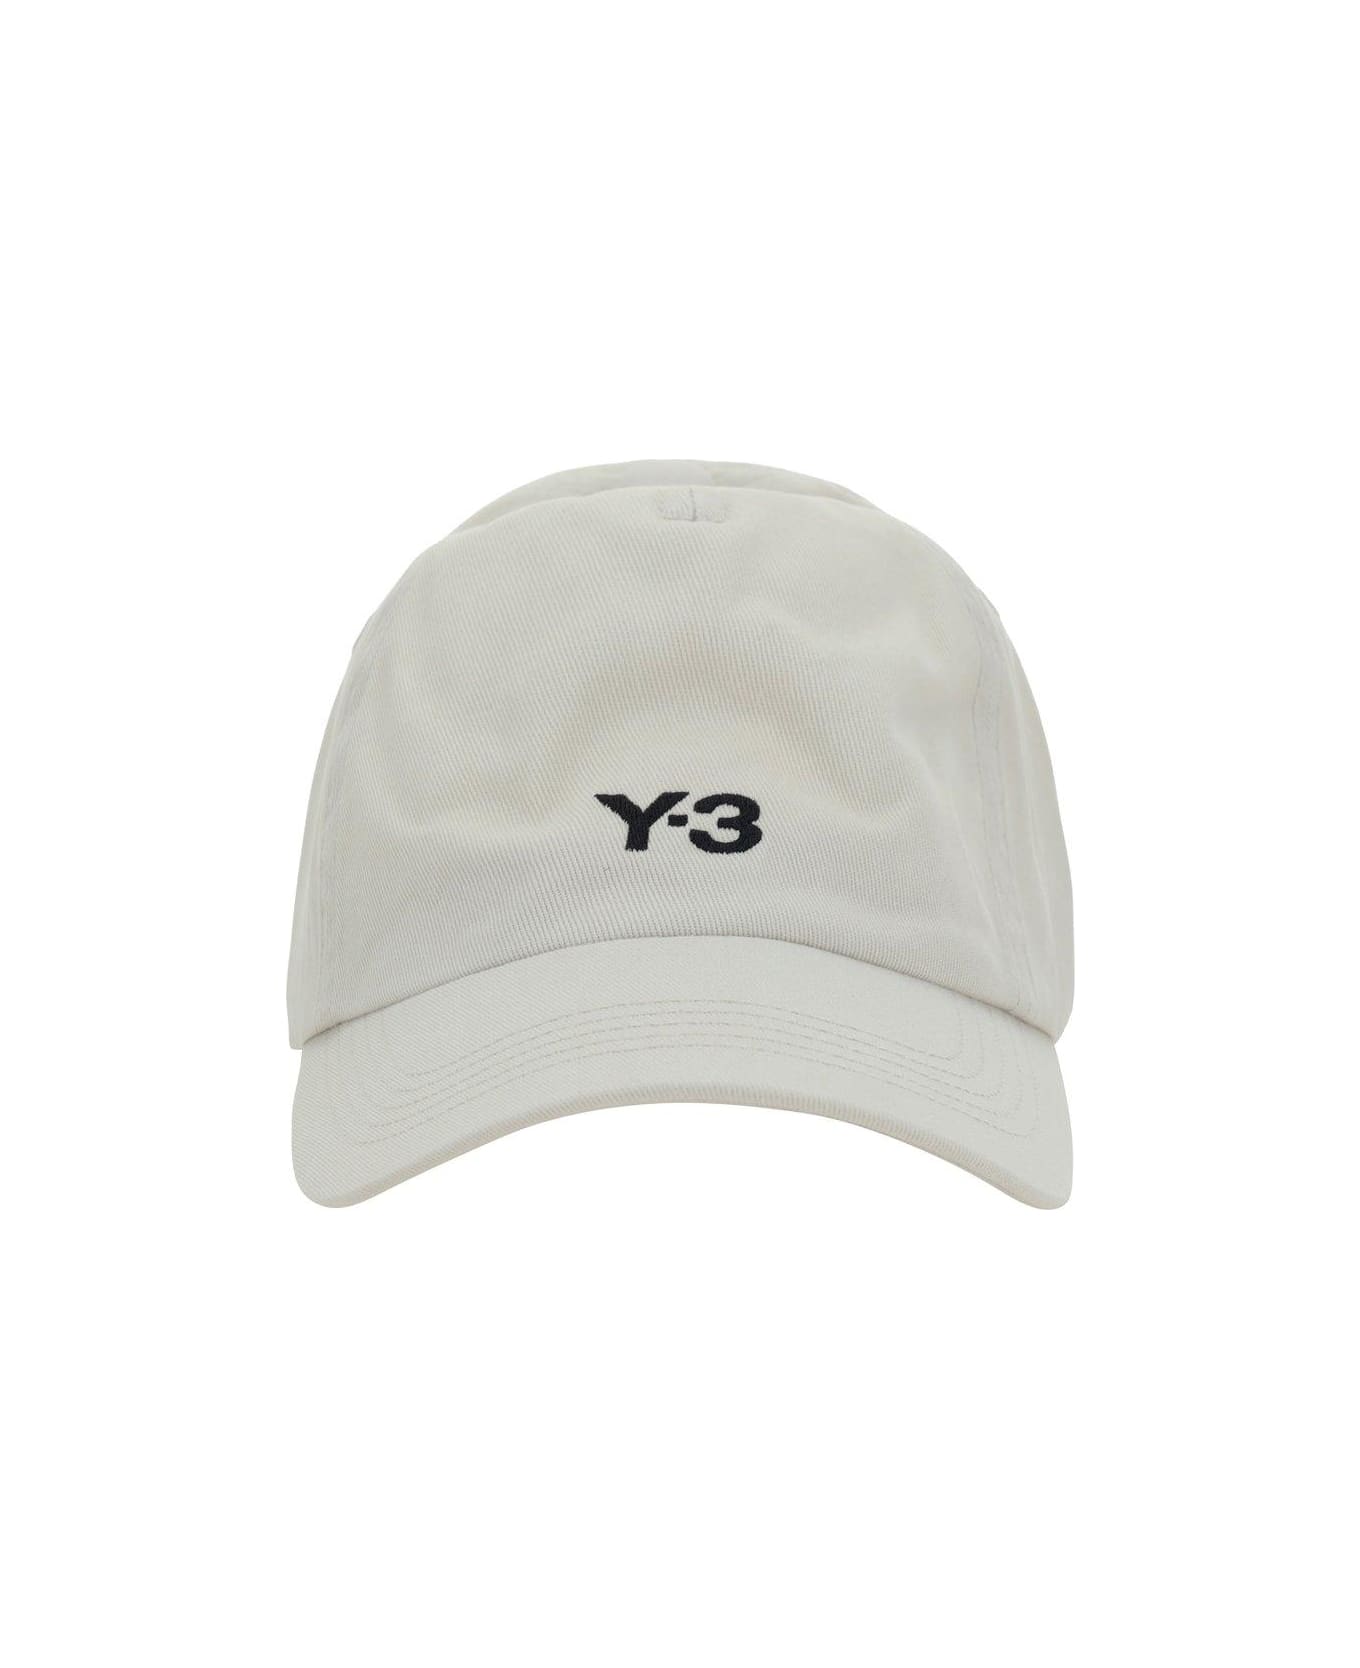 Y-3 Logo Embroidered Baseball Cap Hat - TALC